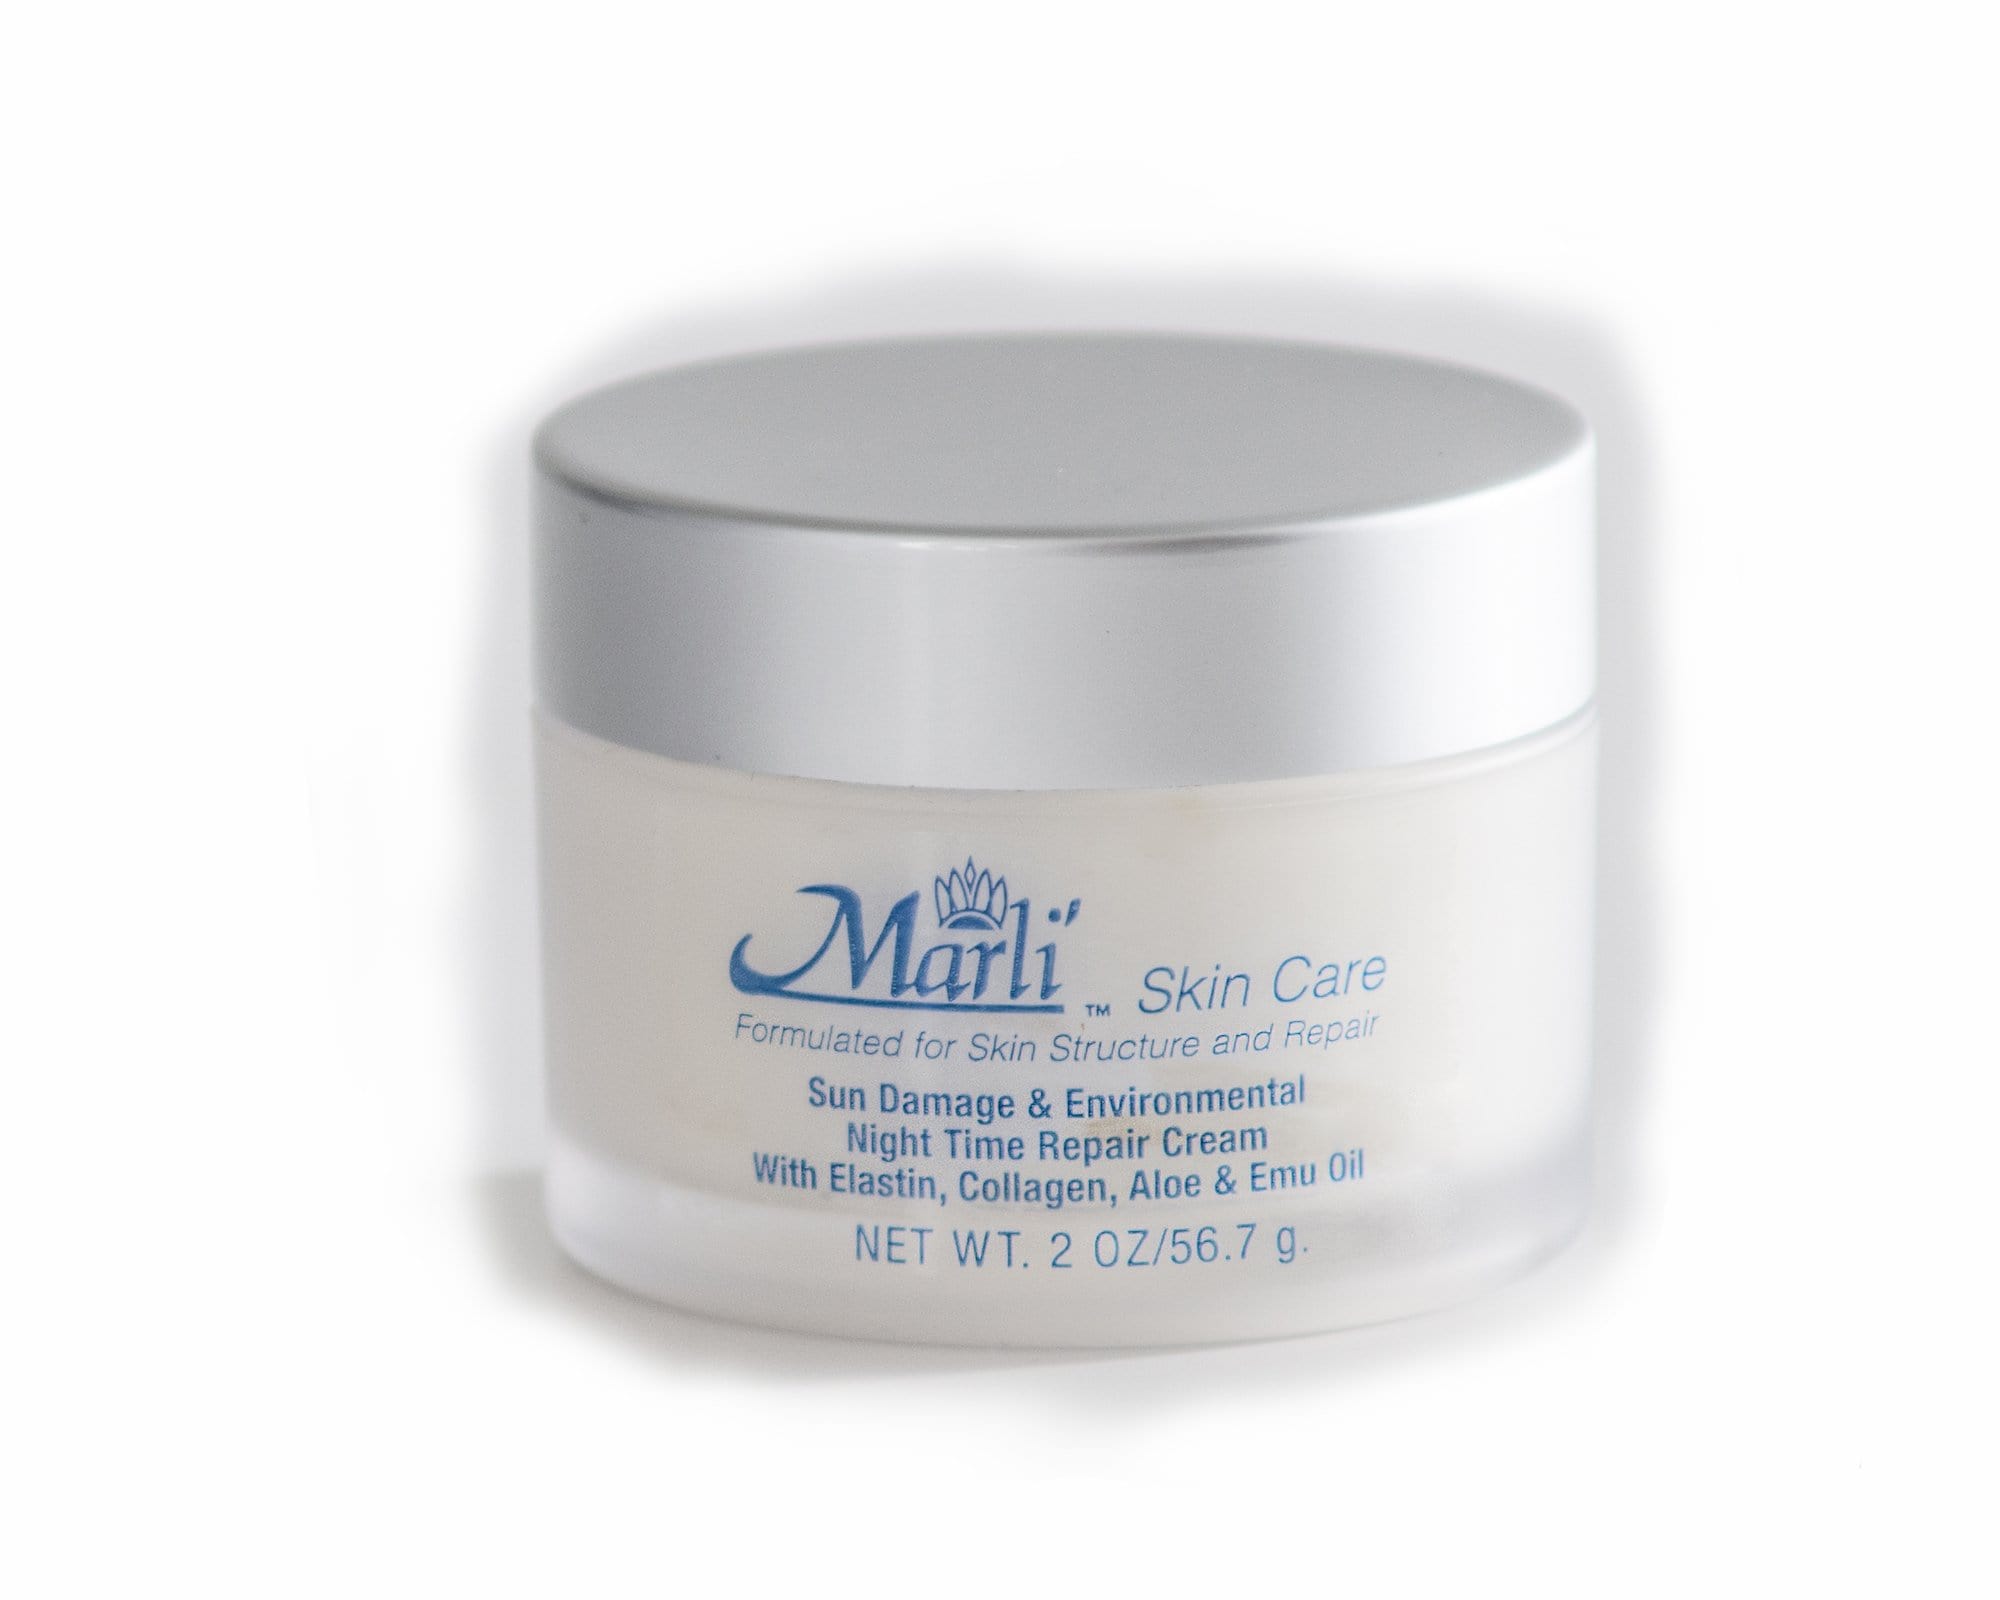 Marli Skin Care Skin Care Marli Complete Skin Care Kit with Sun Damage & Environmental Night Time Repair Cream